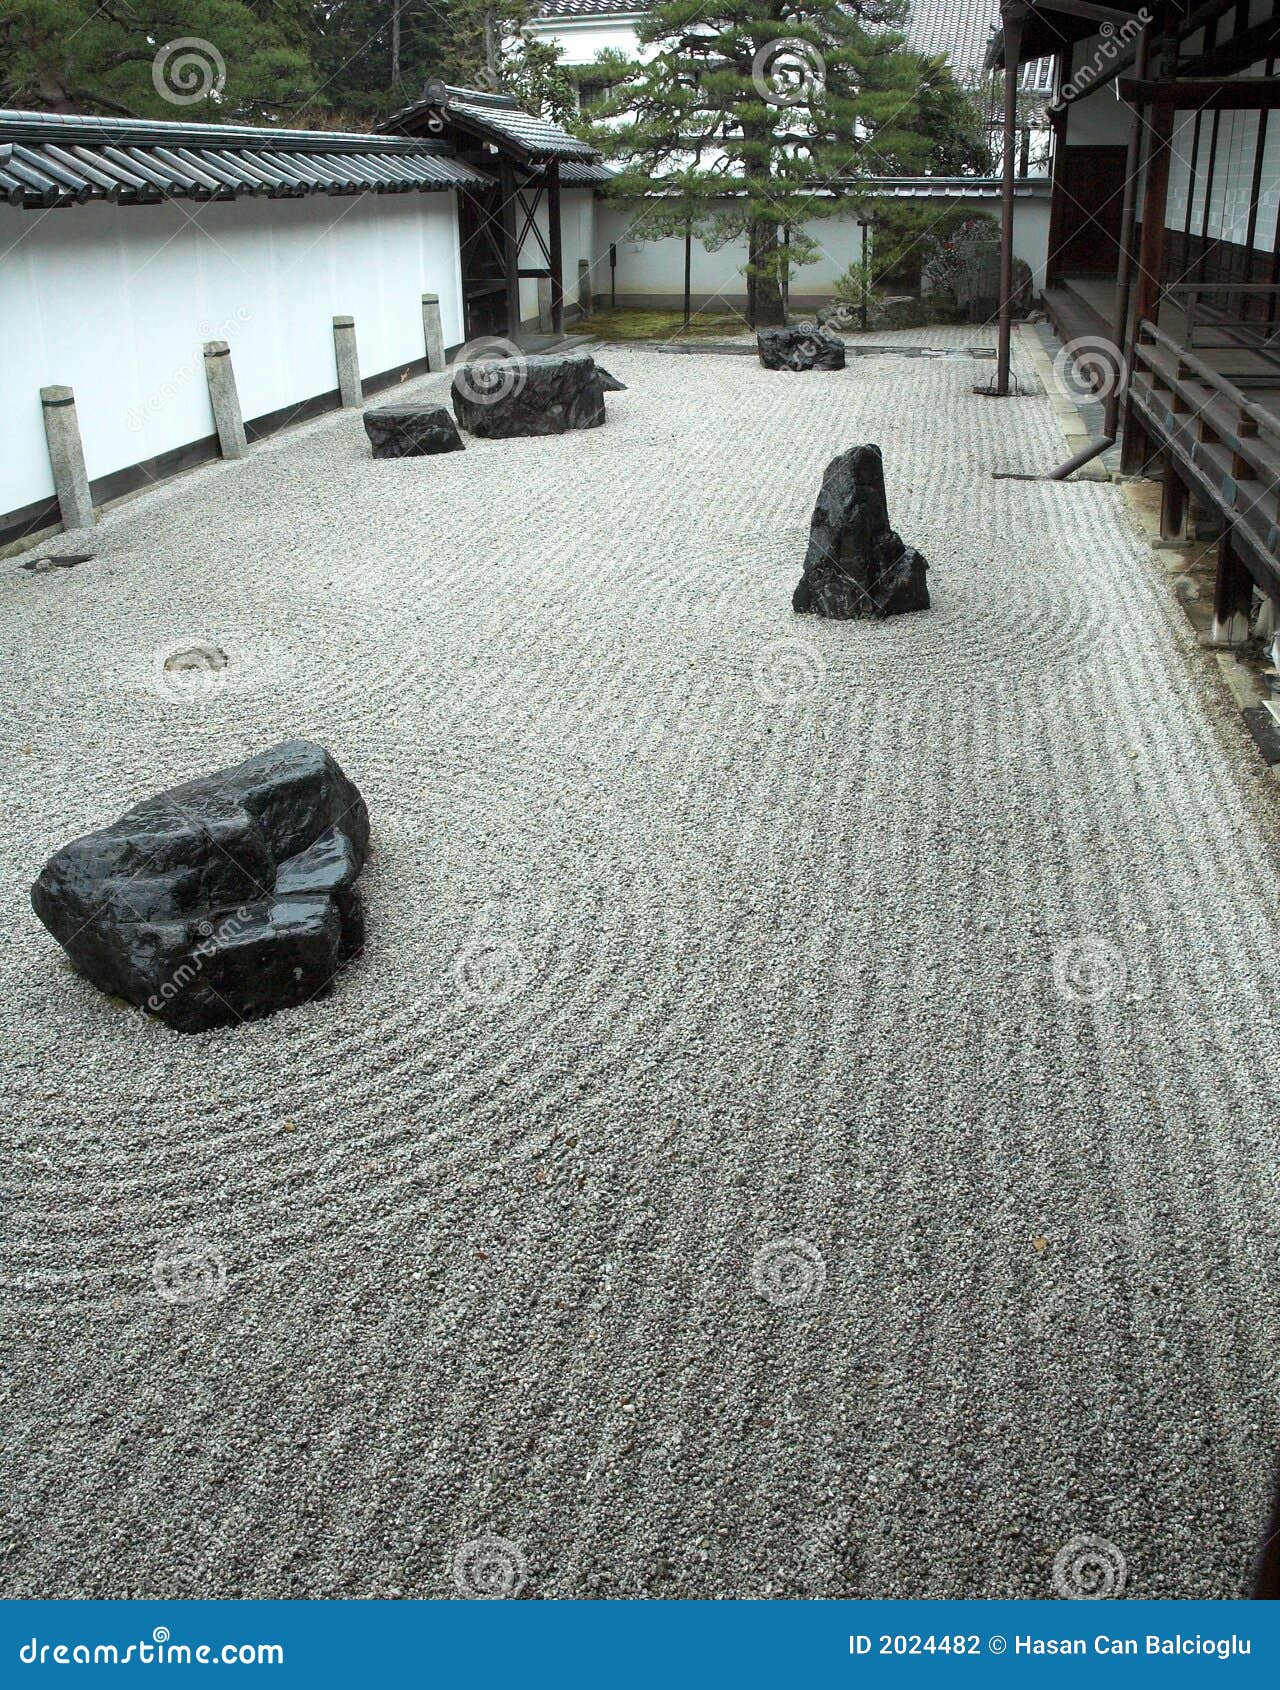 japanese rock gardens